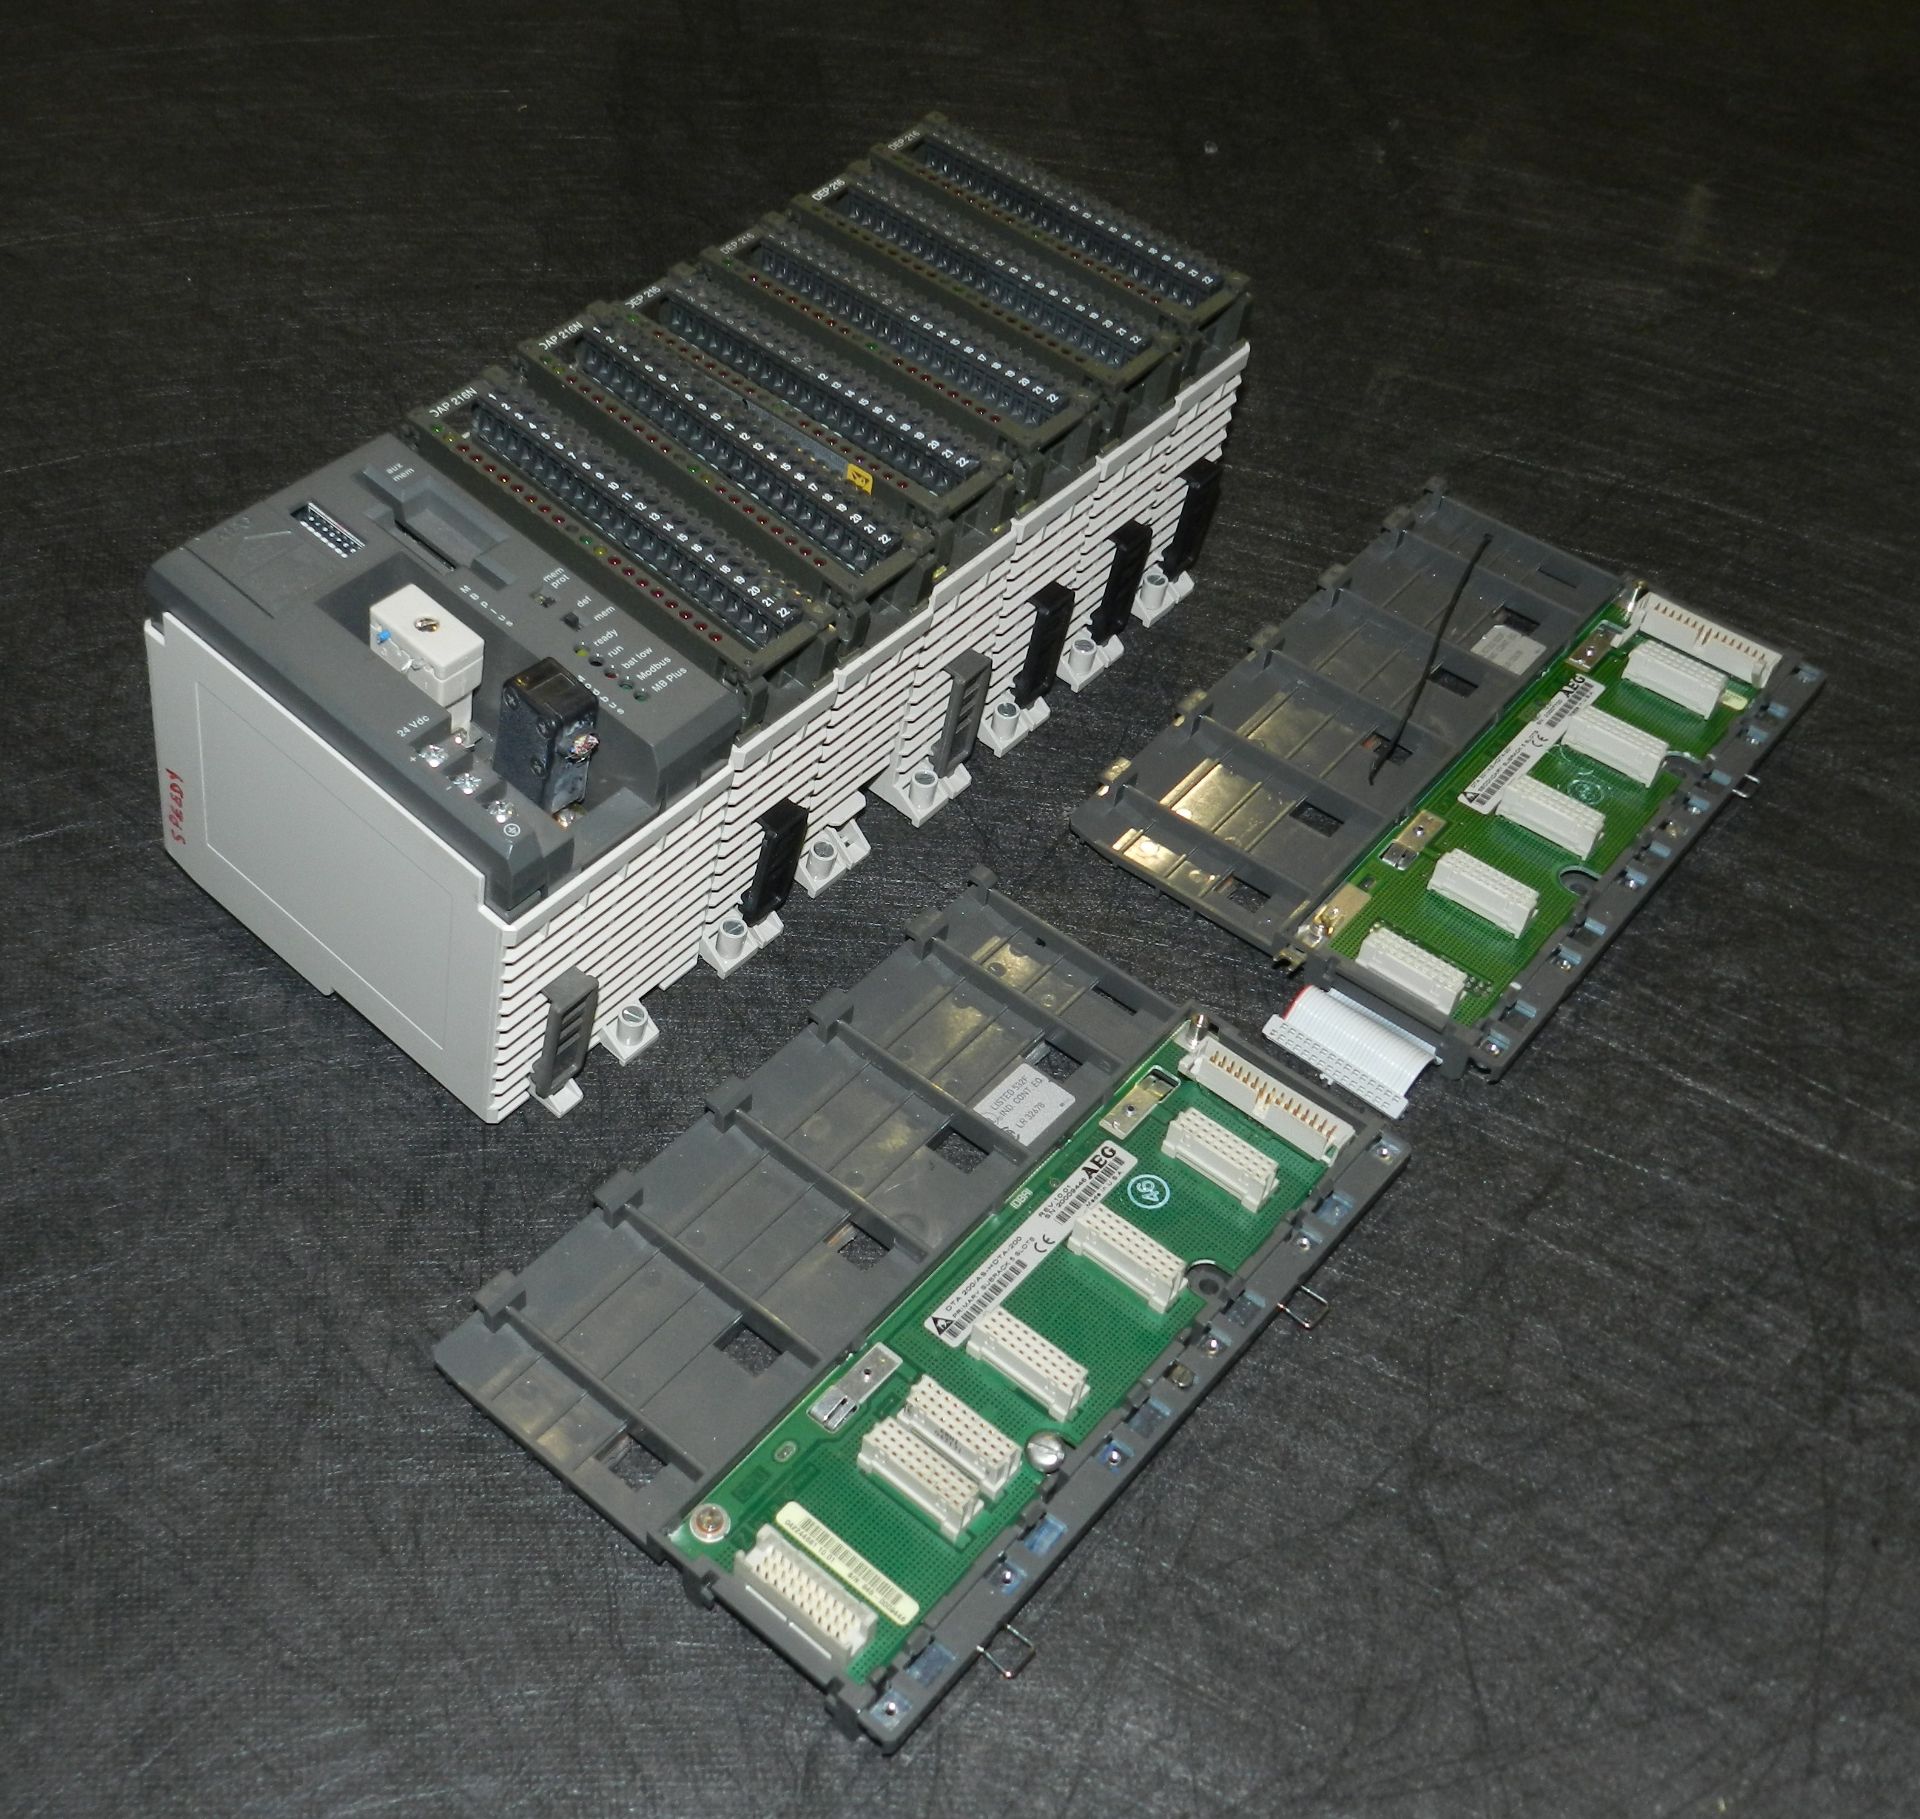 AEG Modicon PC-A984-145 CPU I/O PLC Assembly Rack - Image 10 of 11